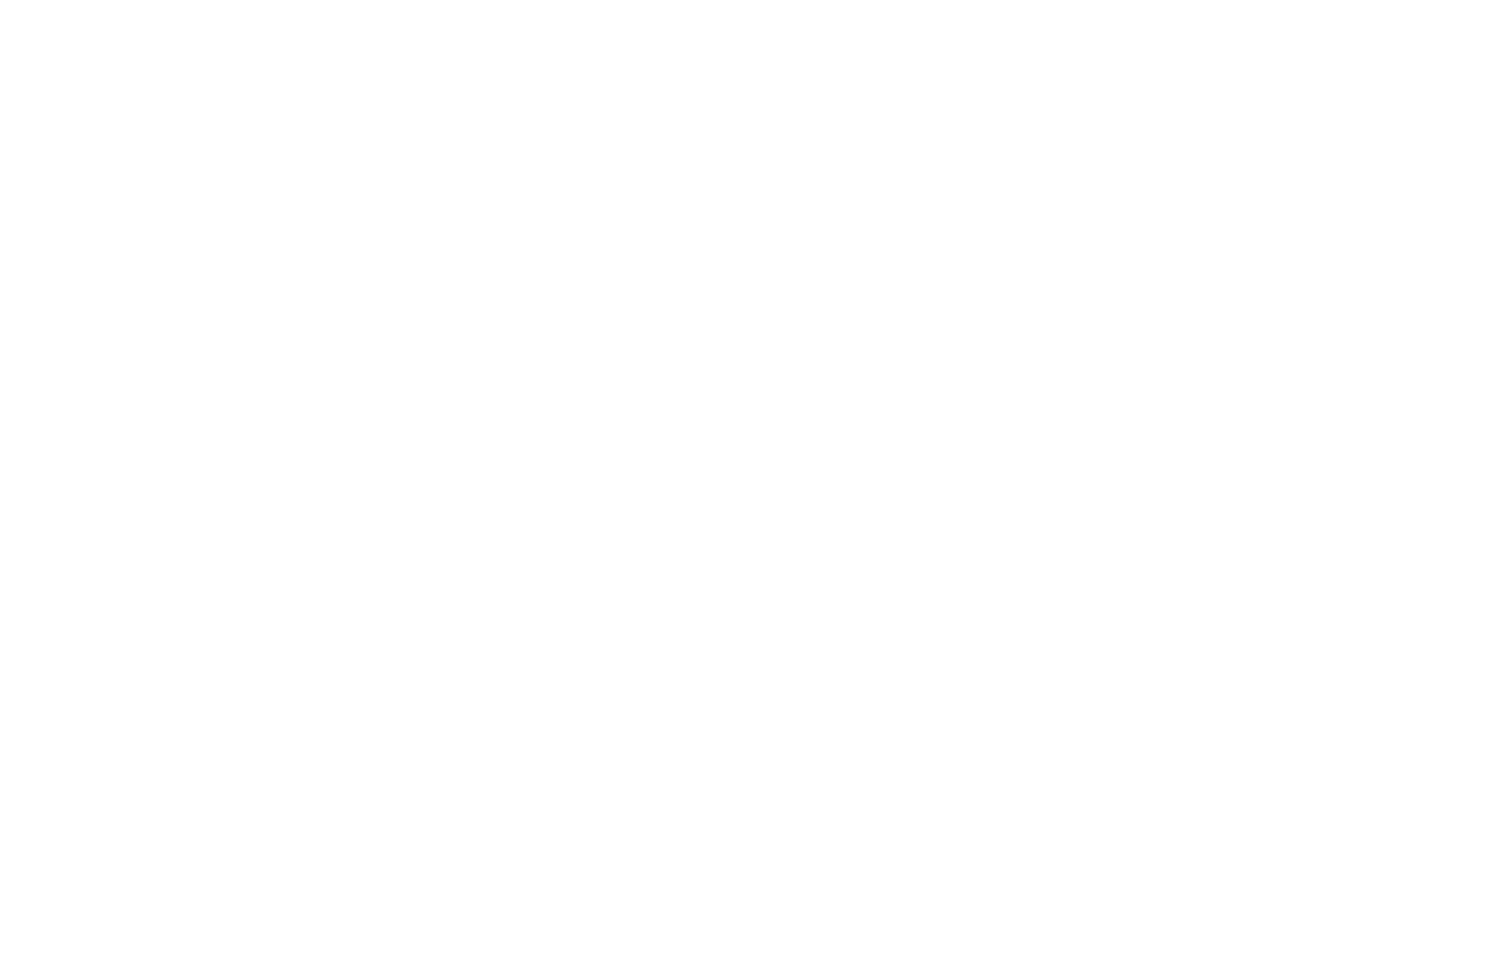 JAMA MEDIA